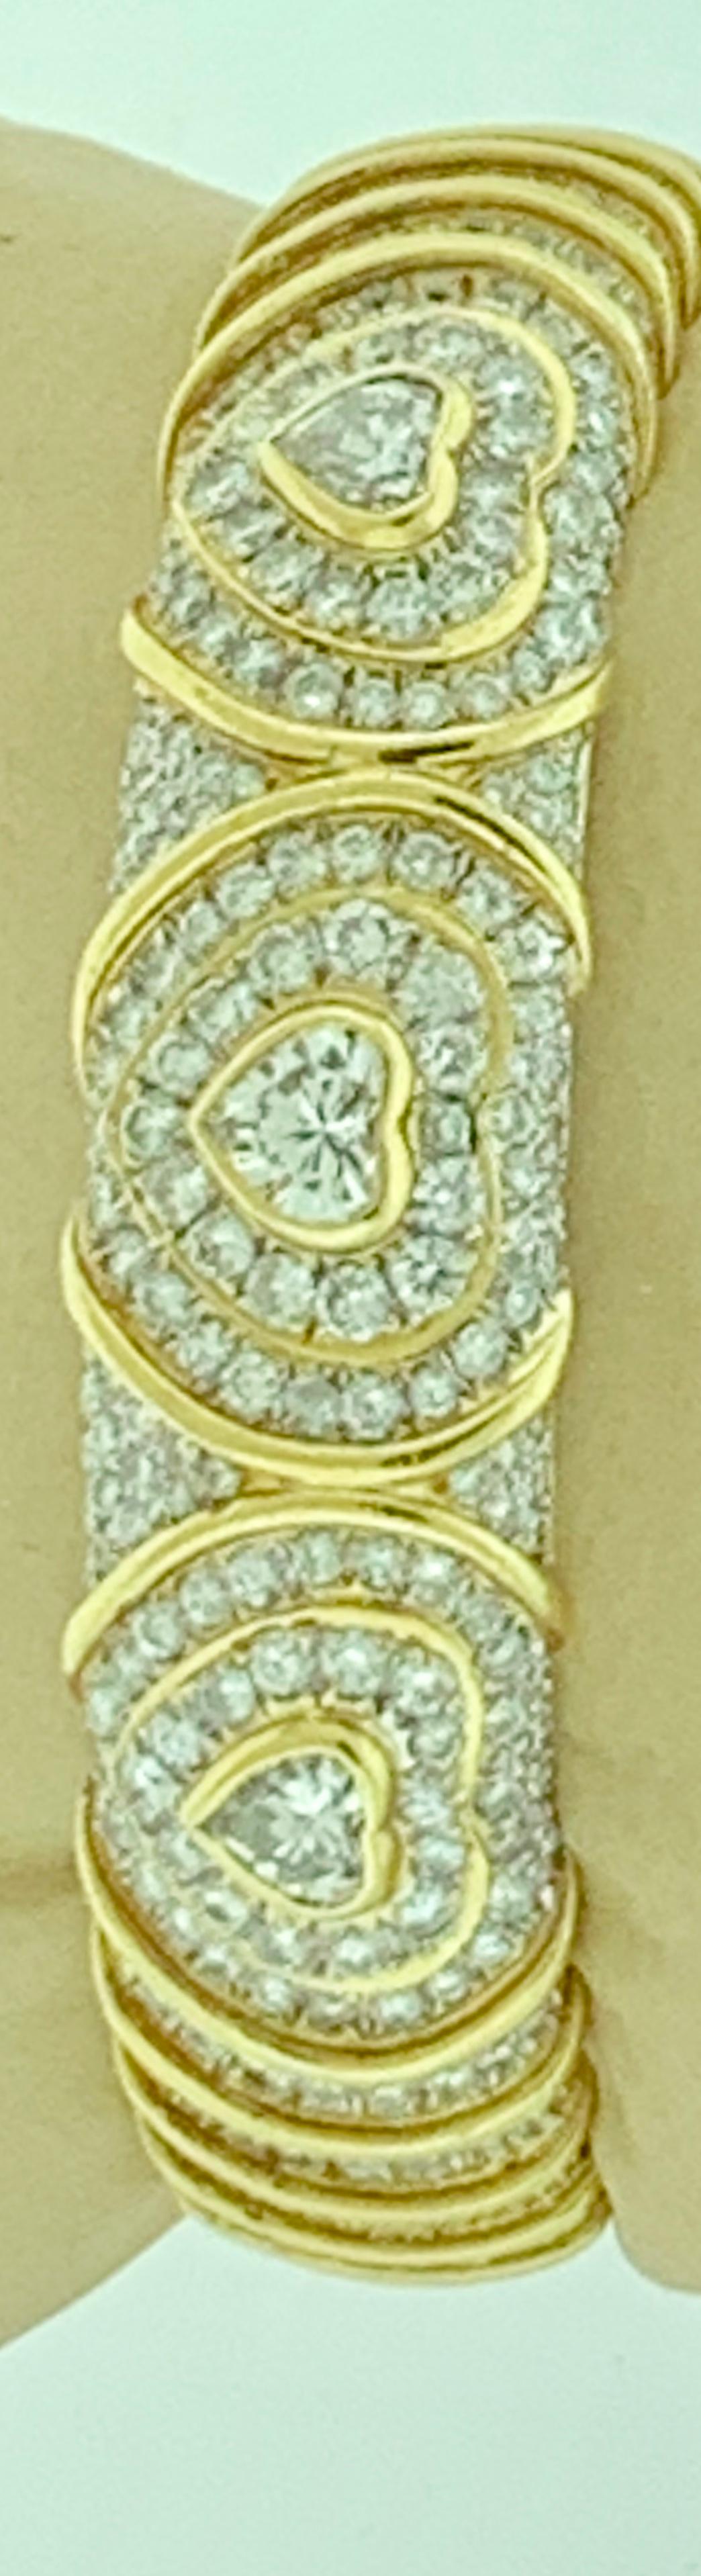 10 Carat Diamond Heart Shape Bangle /Bracelet in 18 Karat Yellow Gold 48 Grams In Good Condition In New York, NY